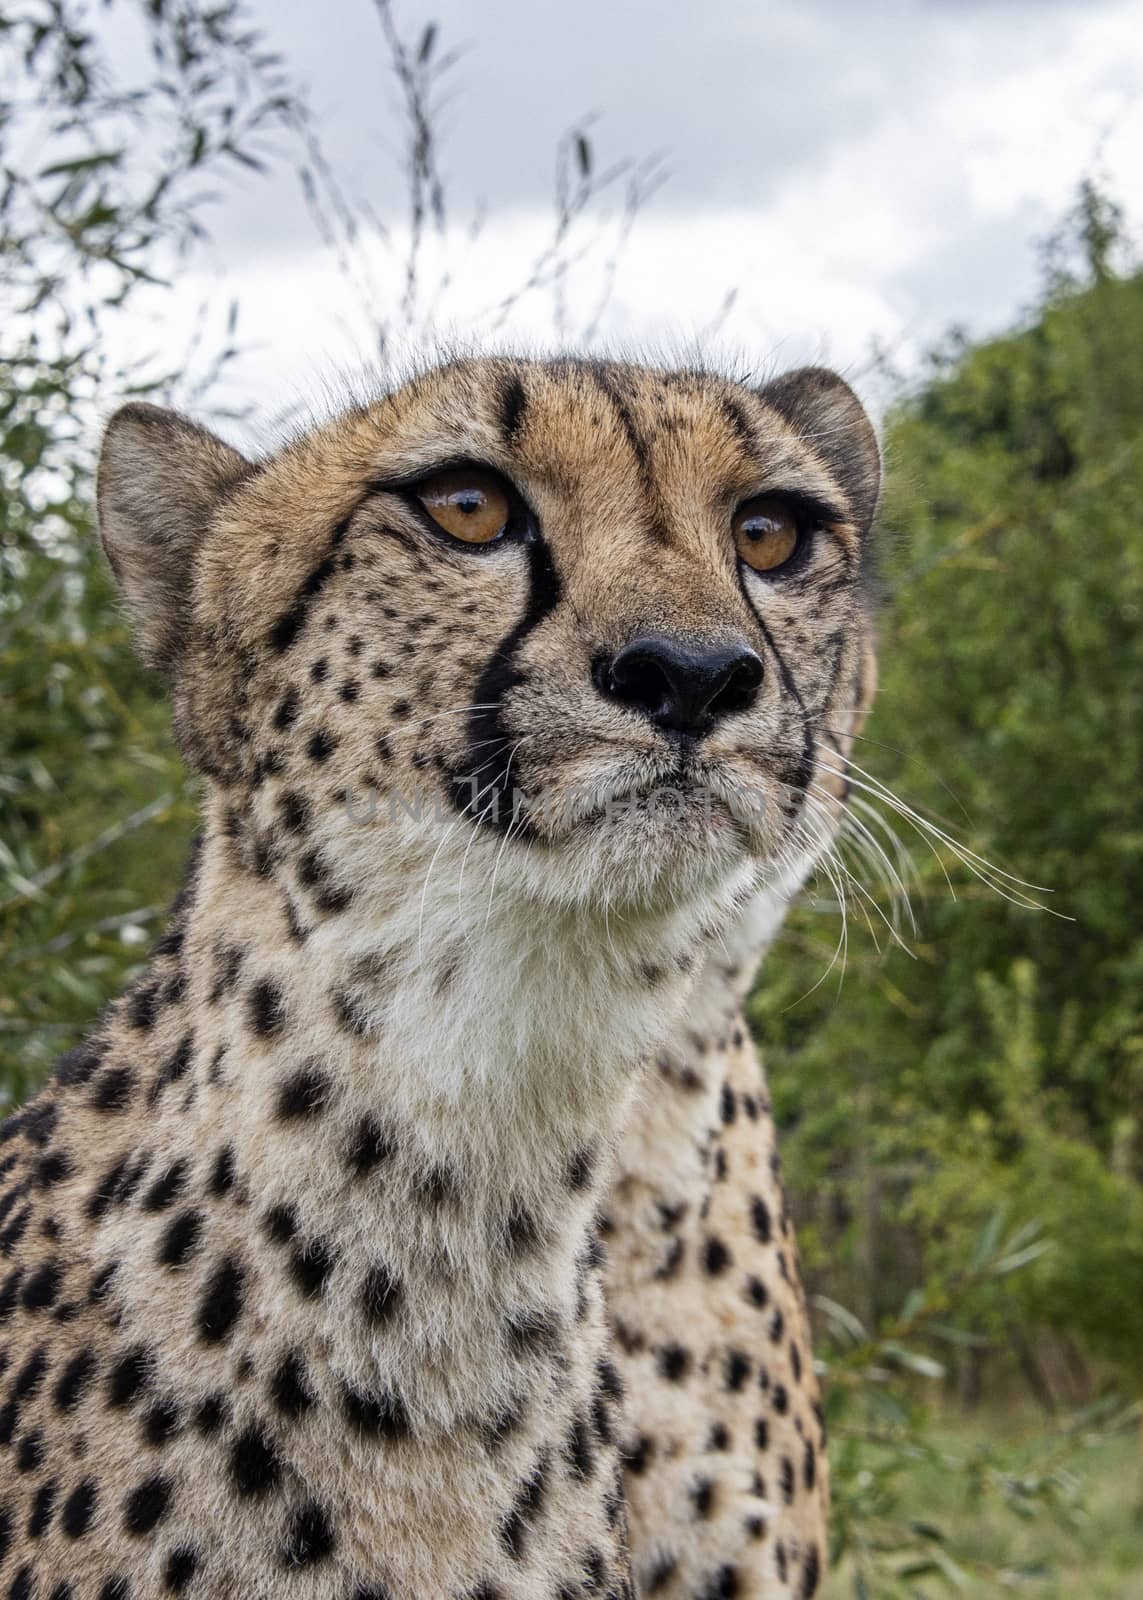 UK, Hamerton Zoo - August 2018:  Cheetah portrait